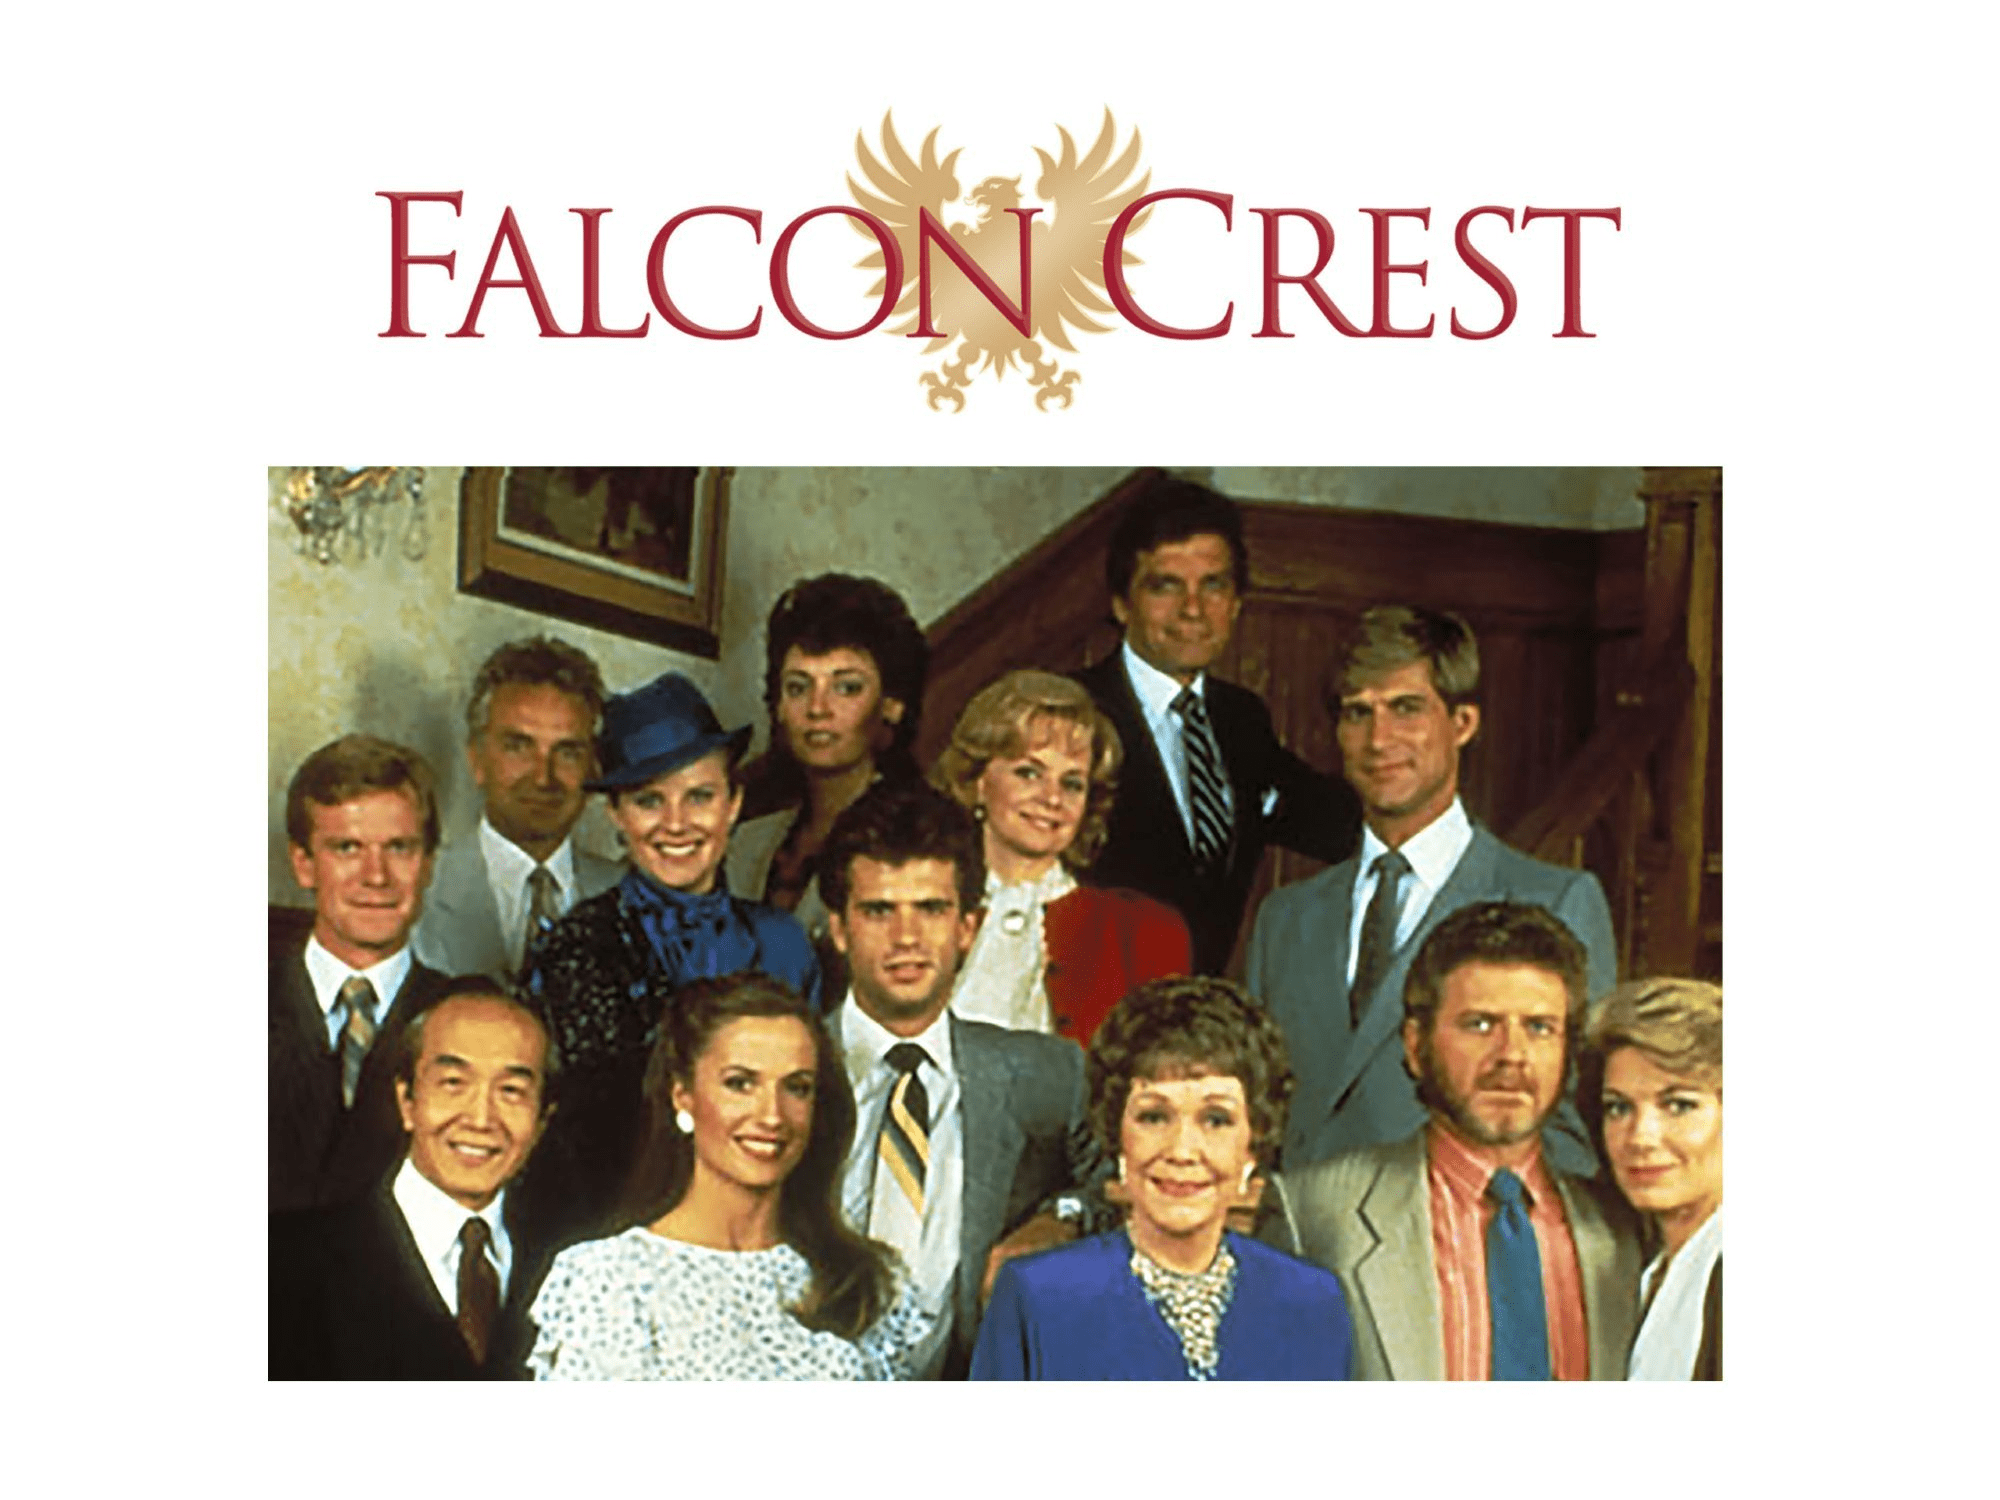 falcon crest cast and show logo